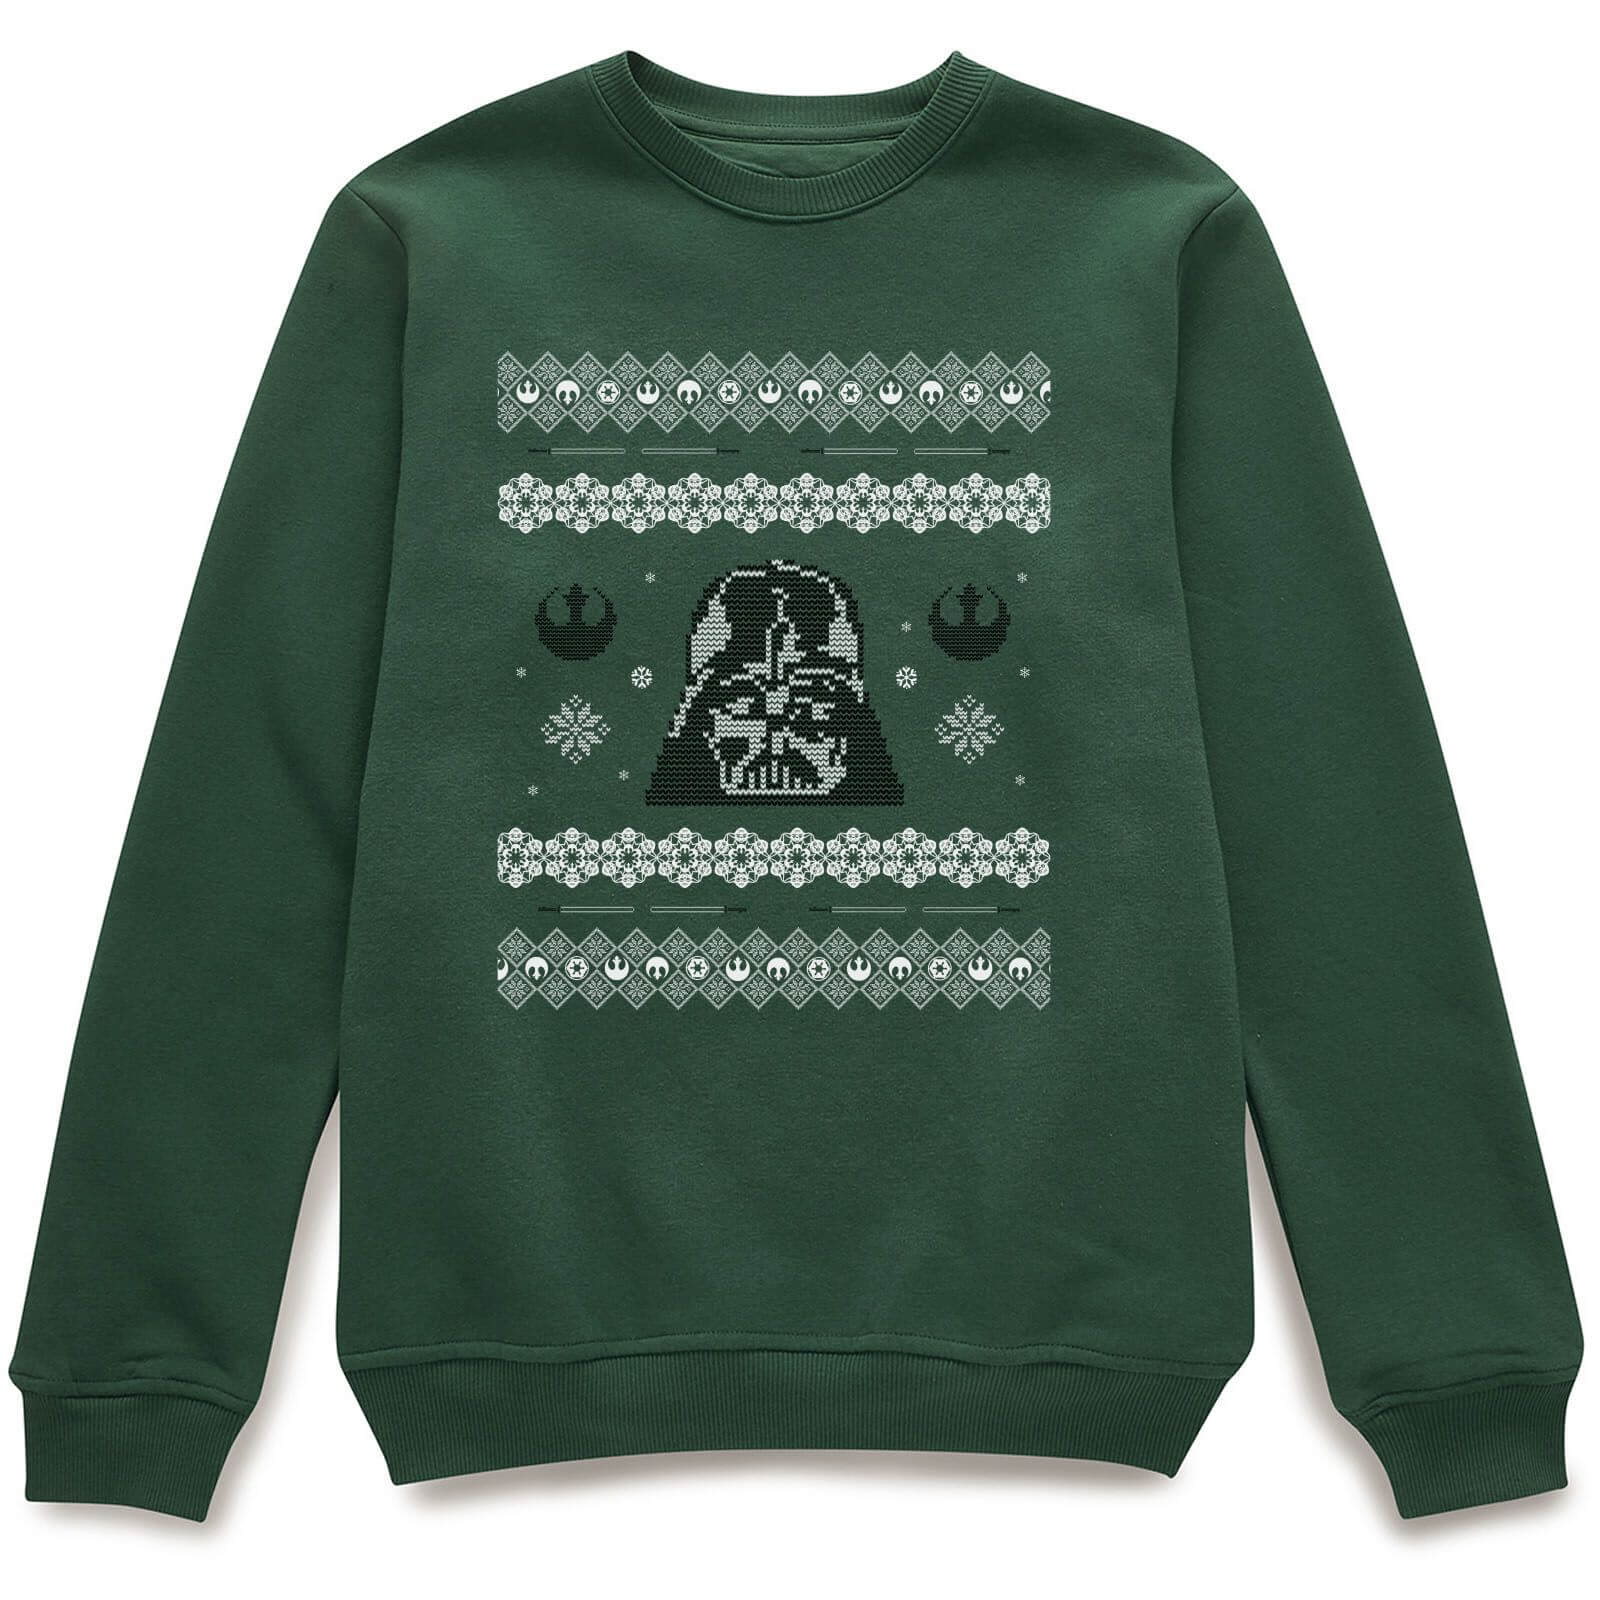 Star Wars Darth Vader Christmas Knit Green Christmas Sweatshirt - XL - Green